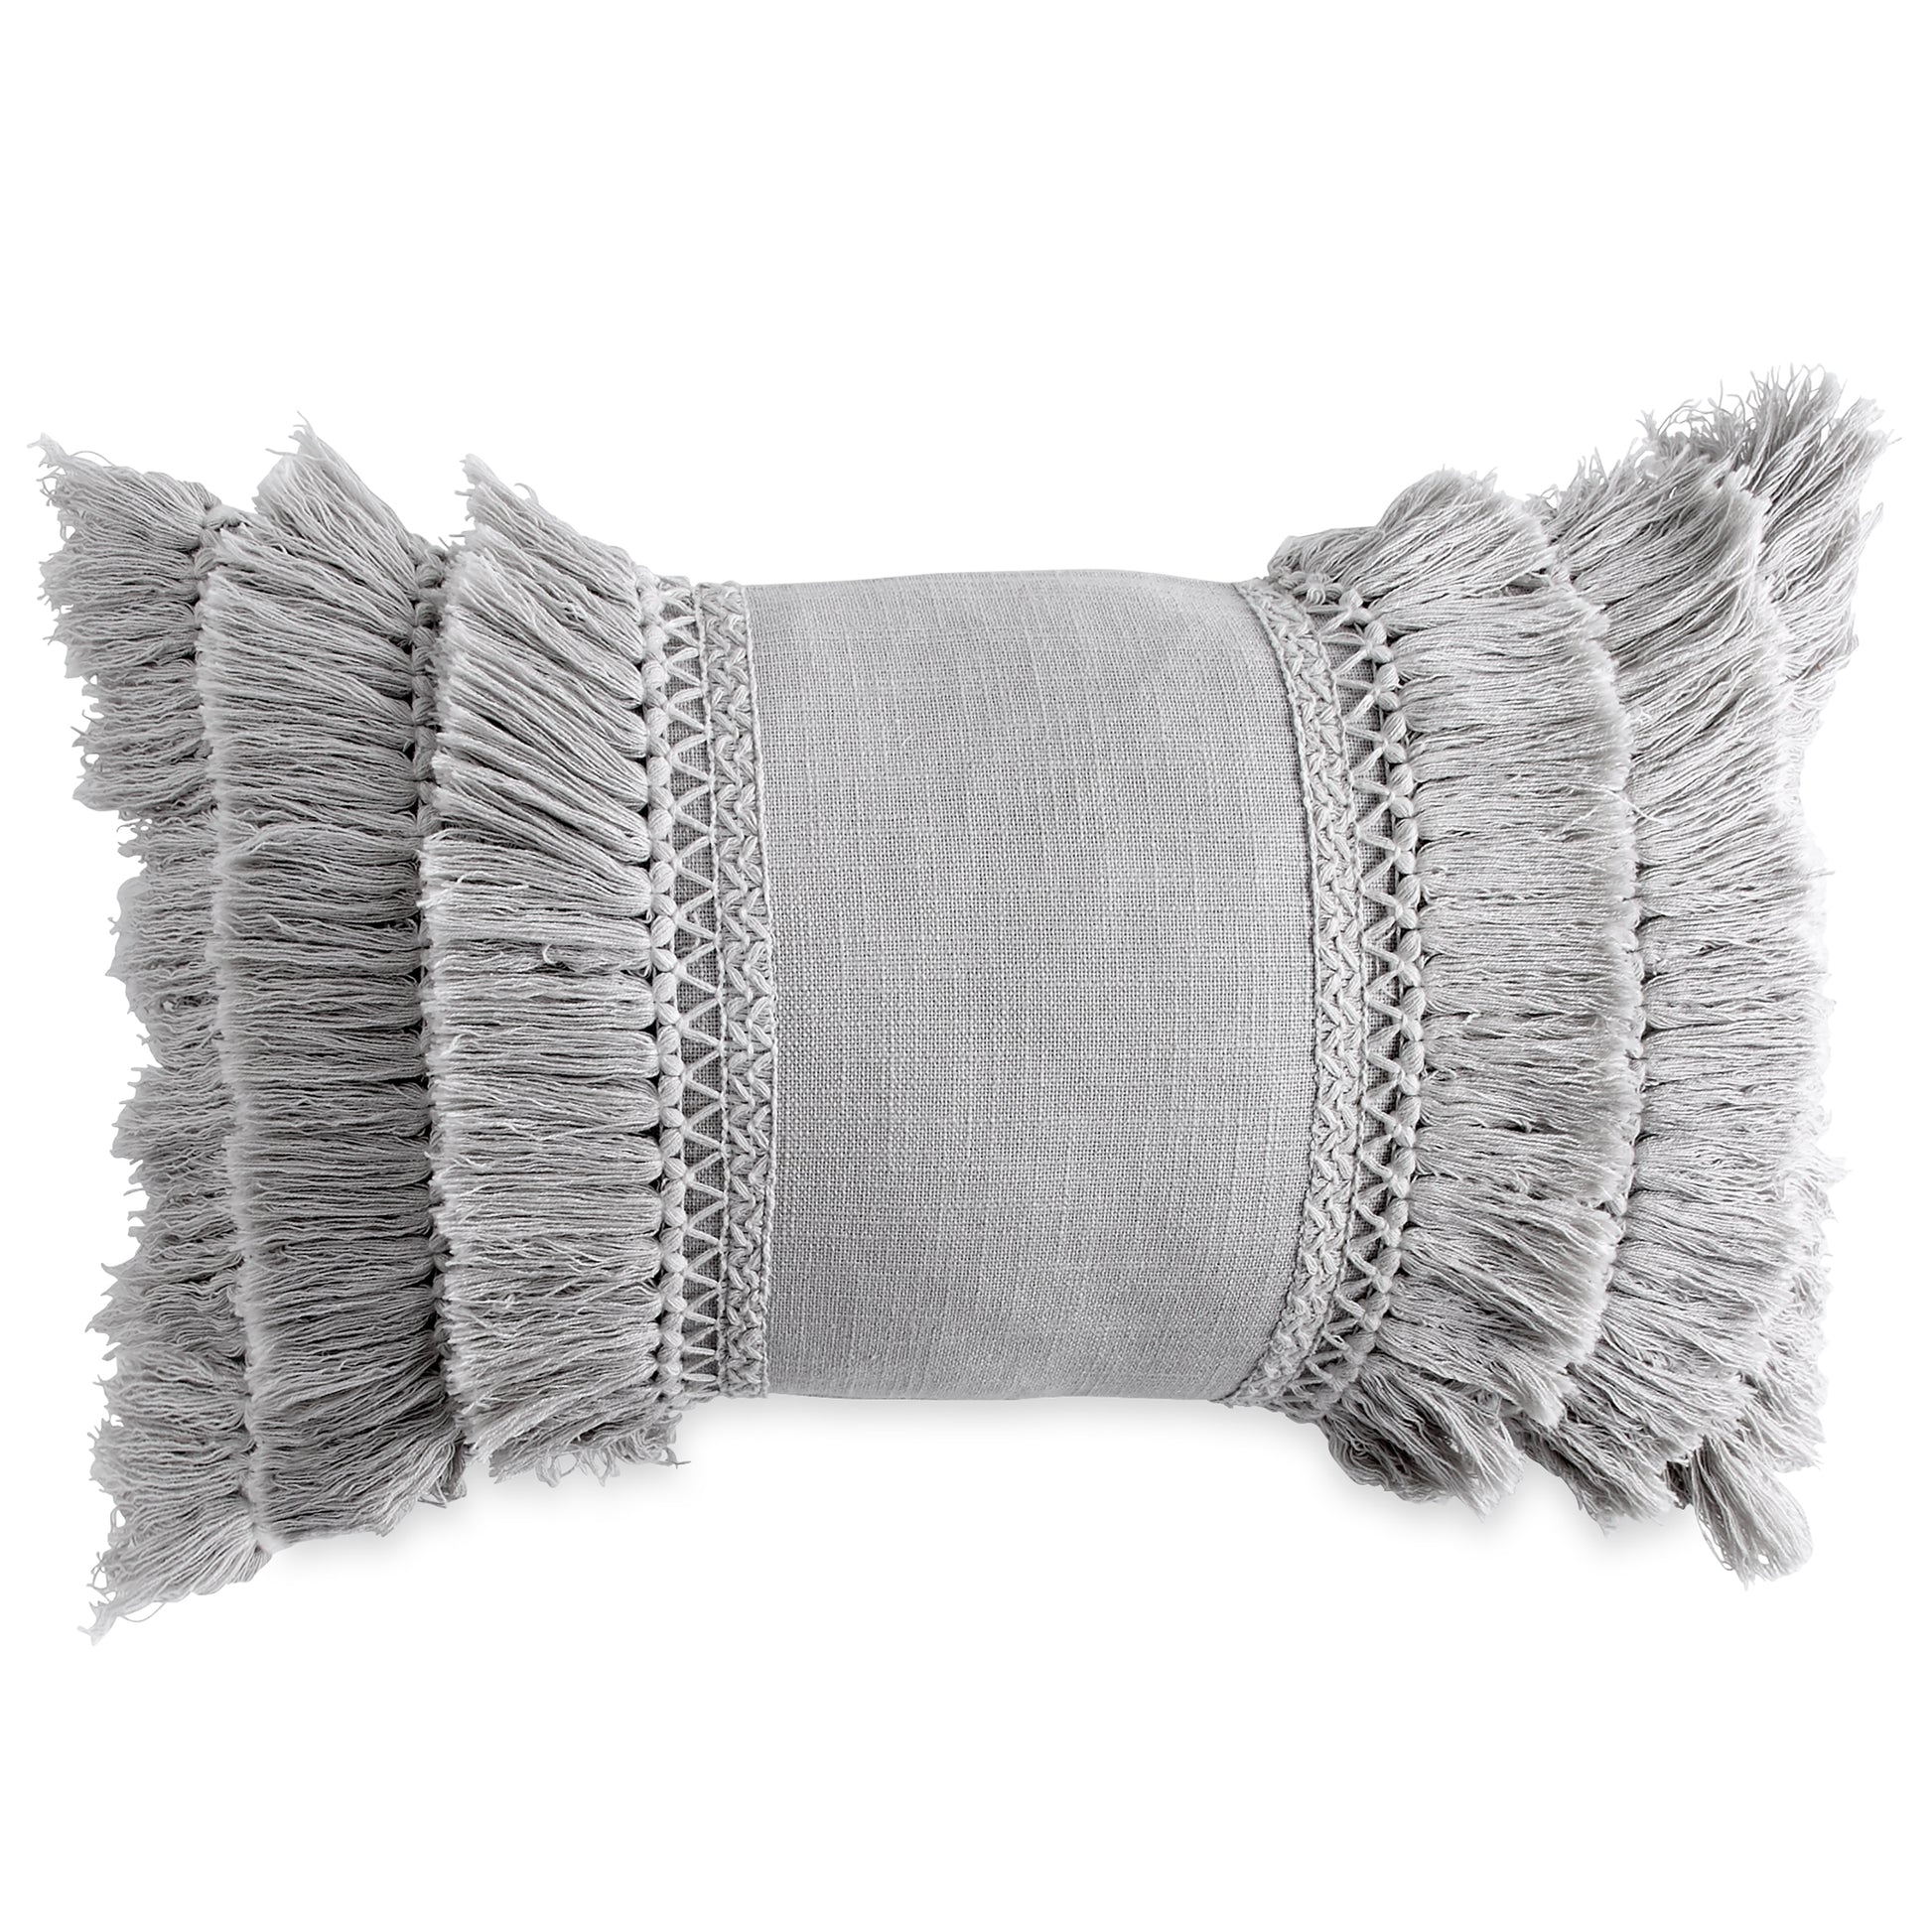 Peri Home Fringe Decorative Pillow grey